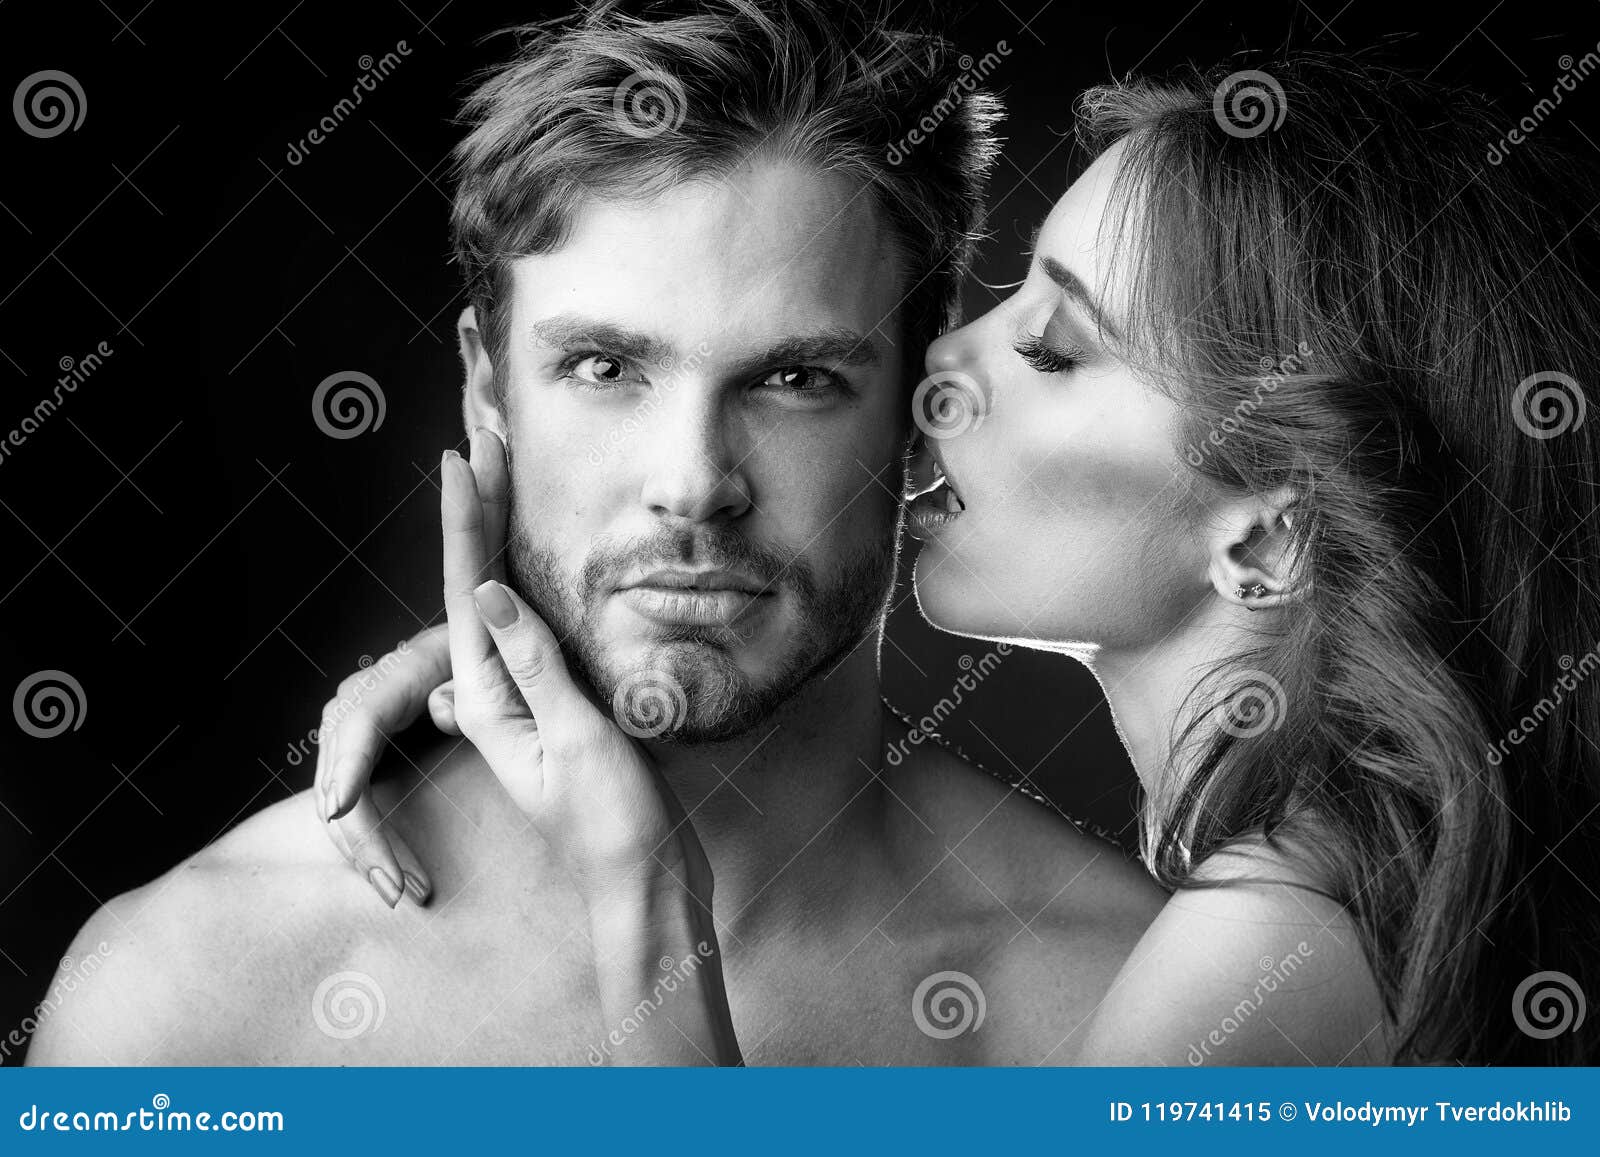 Chest mans woman kissing Where Do